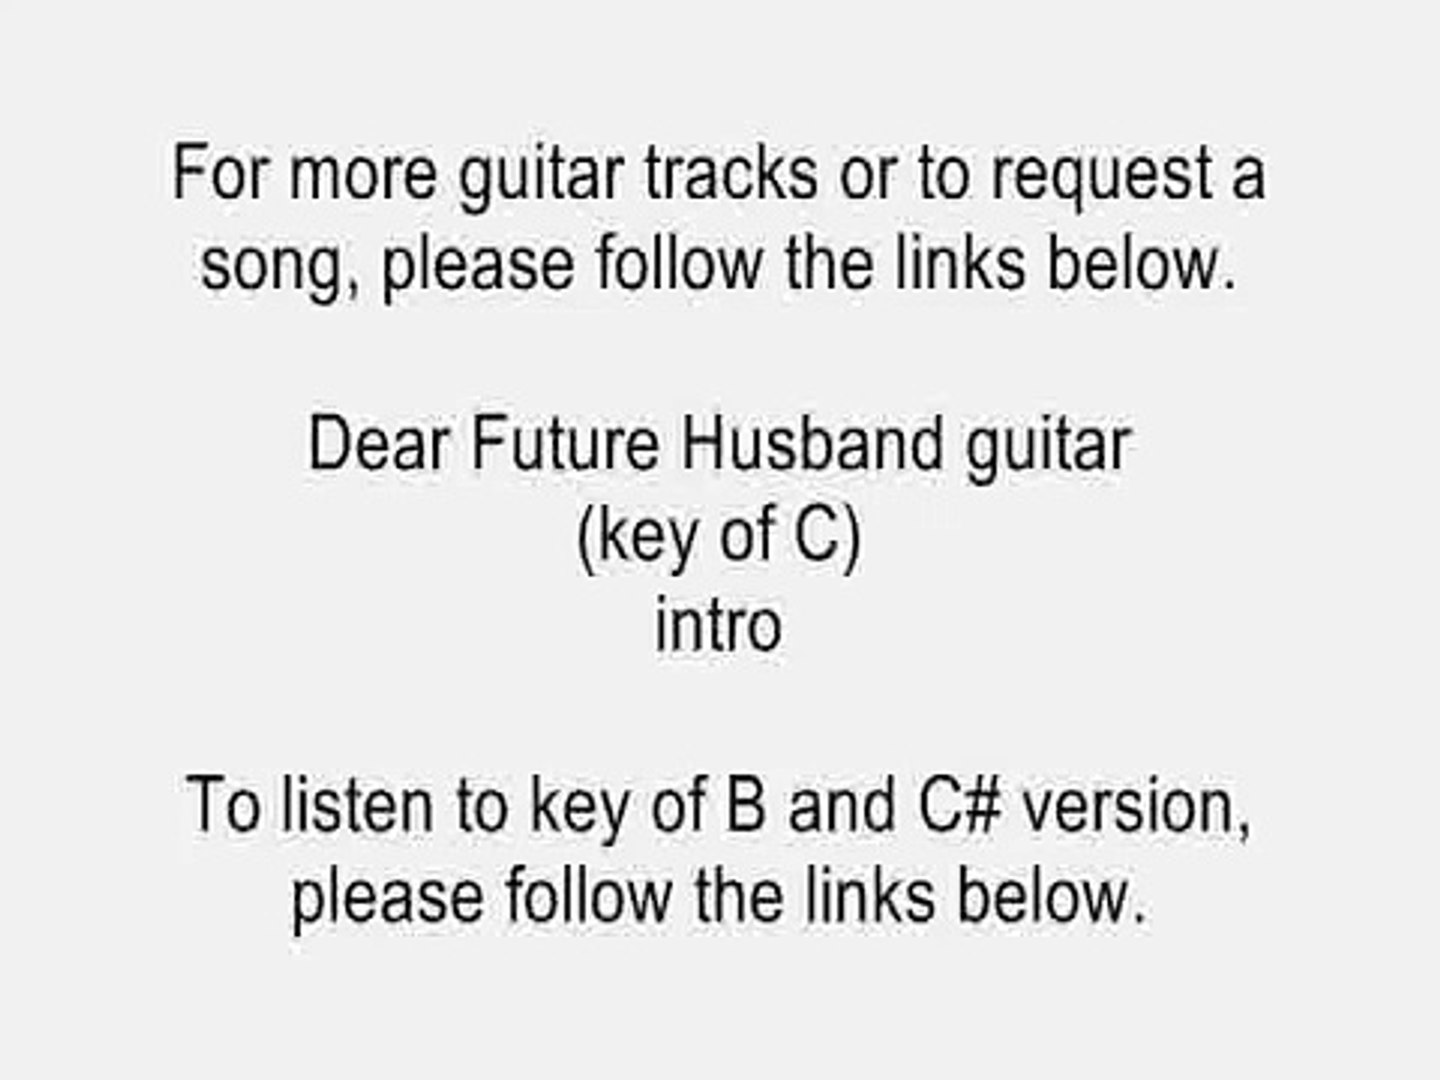 Dear Future Husband - song and lyrics by Meghan Trainor